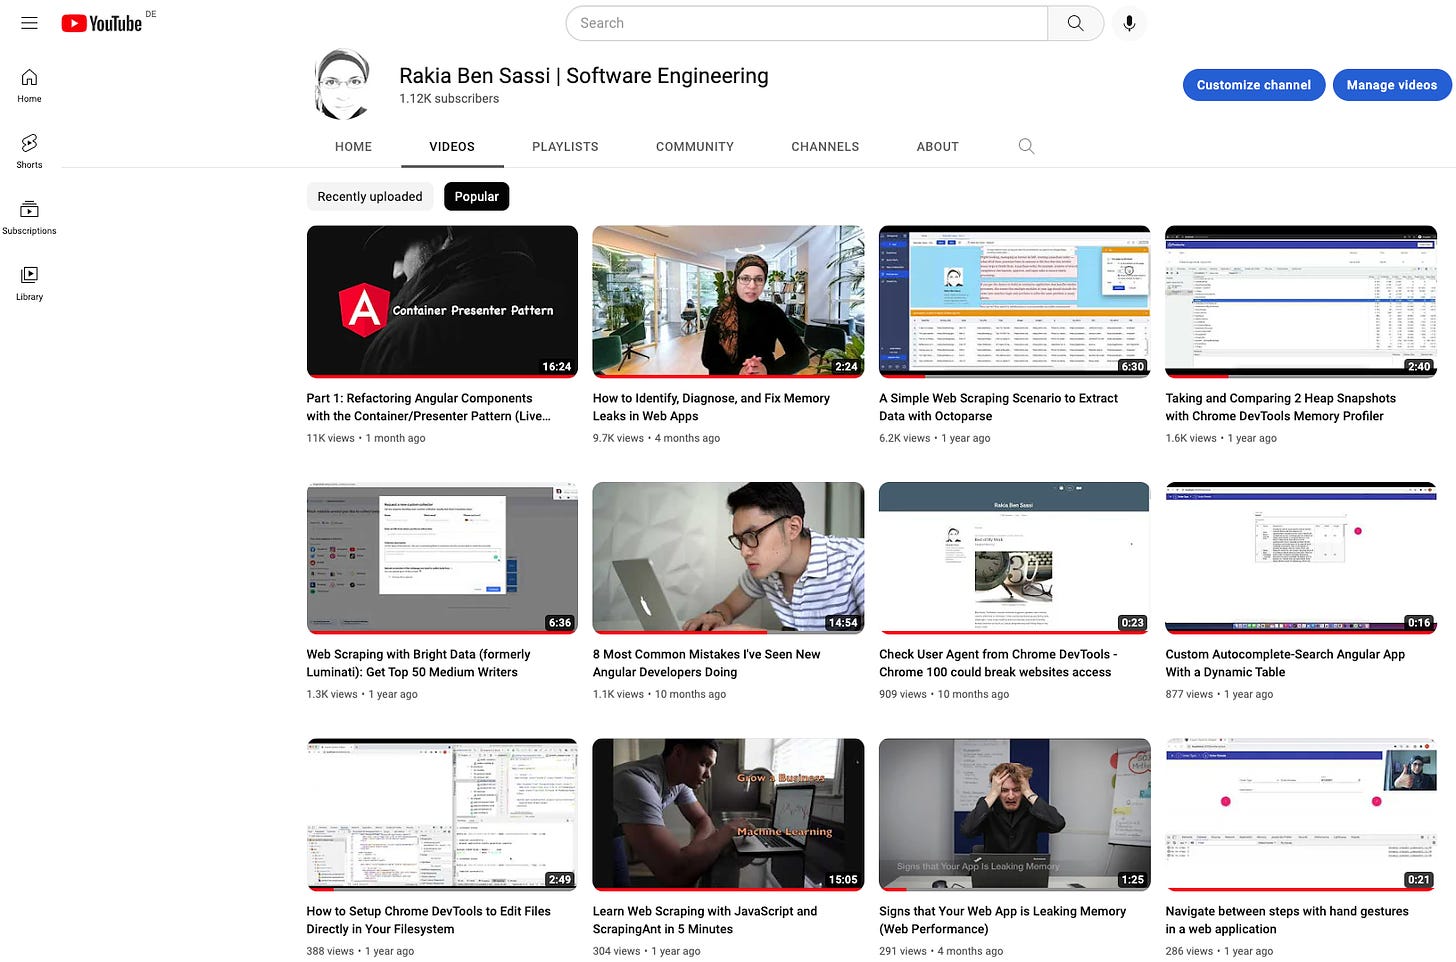 My YouTube channel: Rakia Ben Sassi - Software Engineering